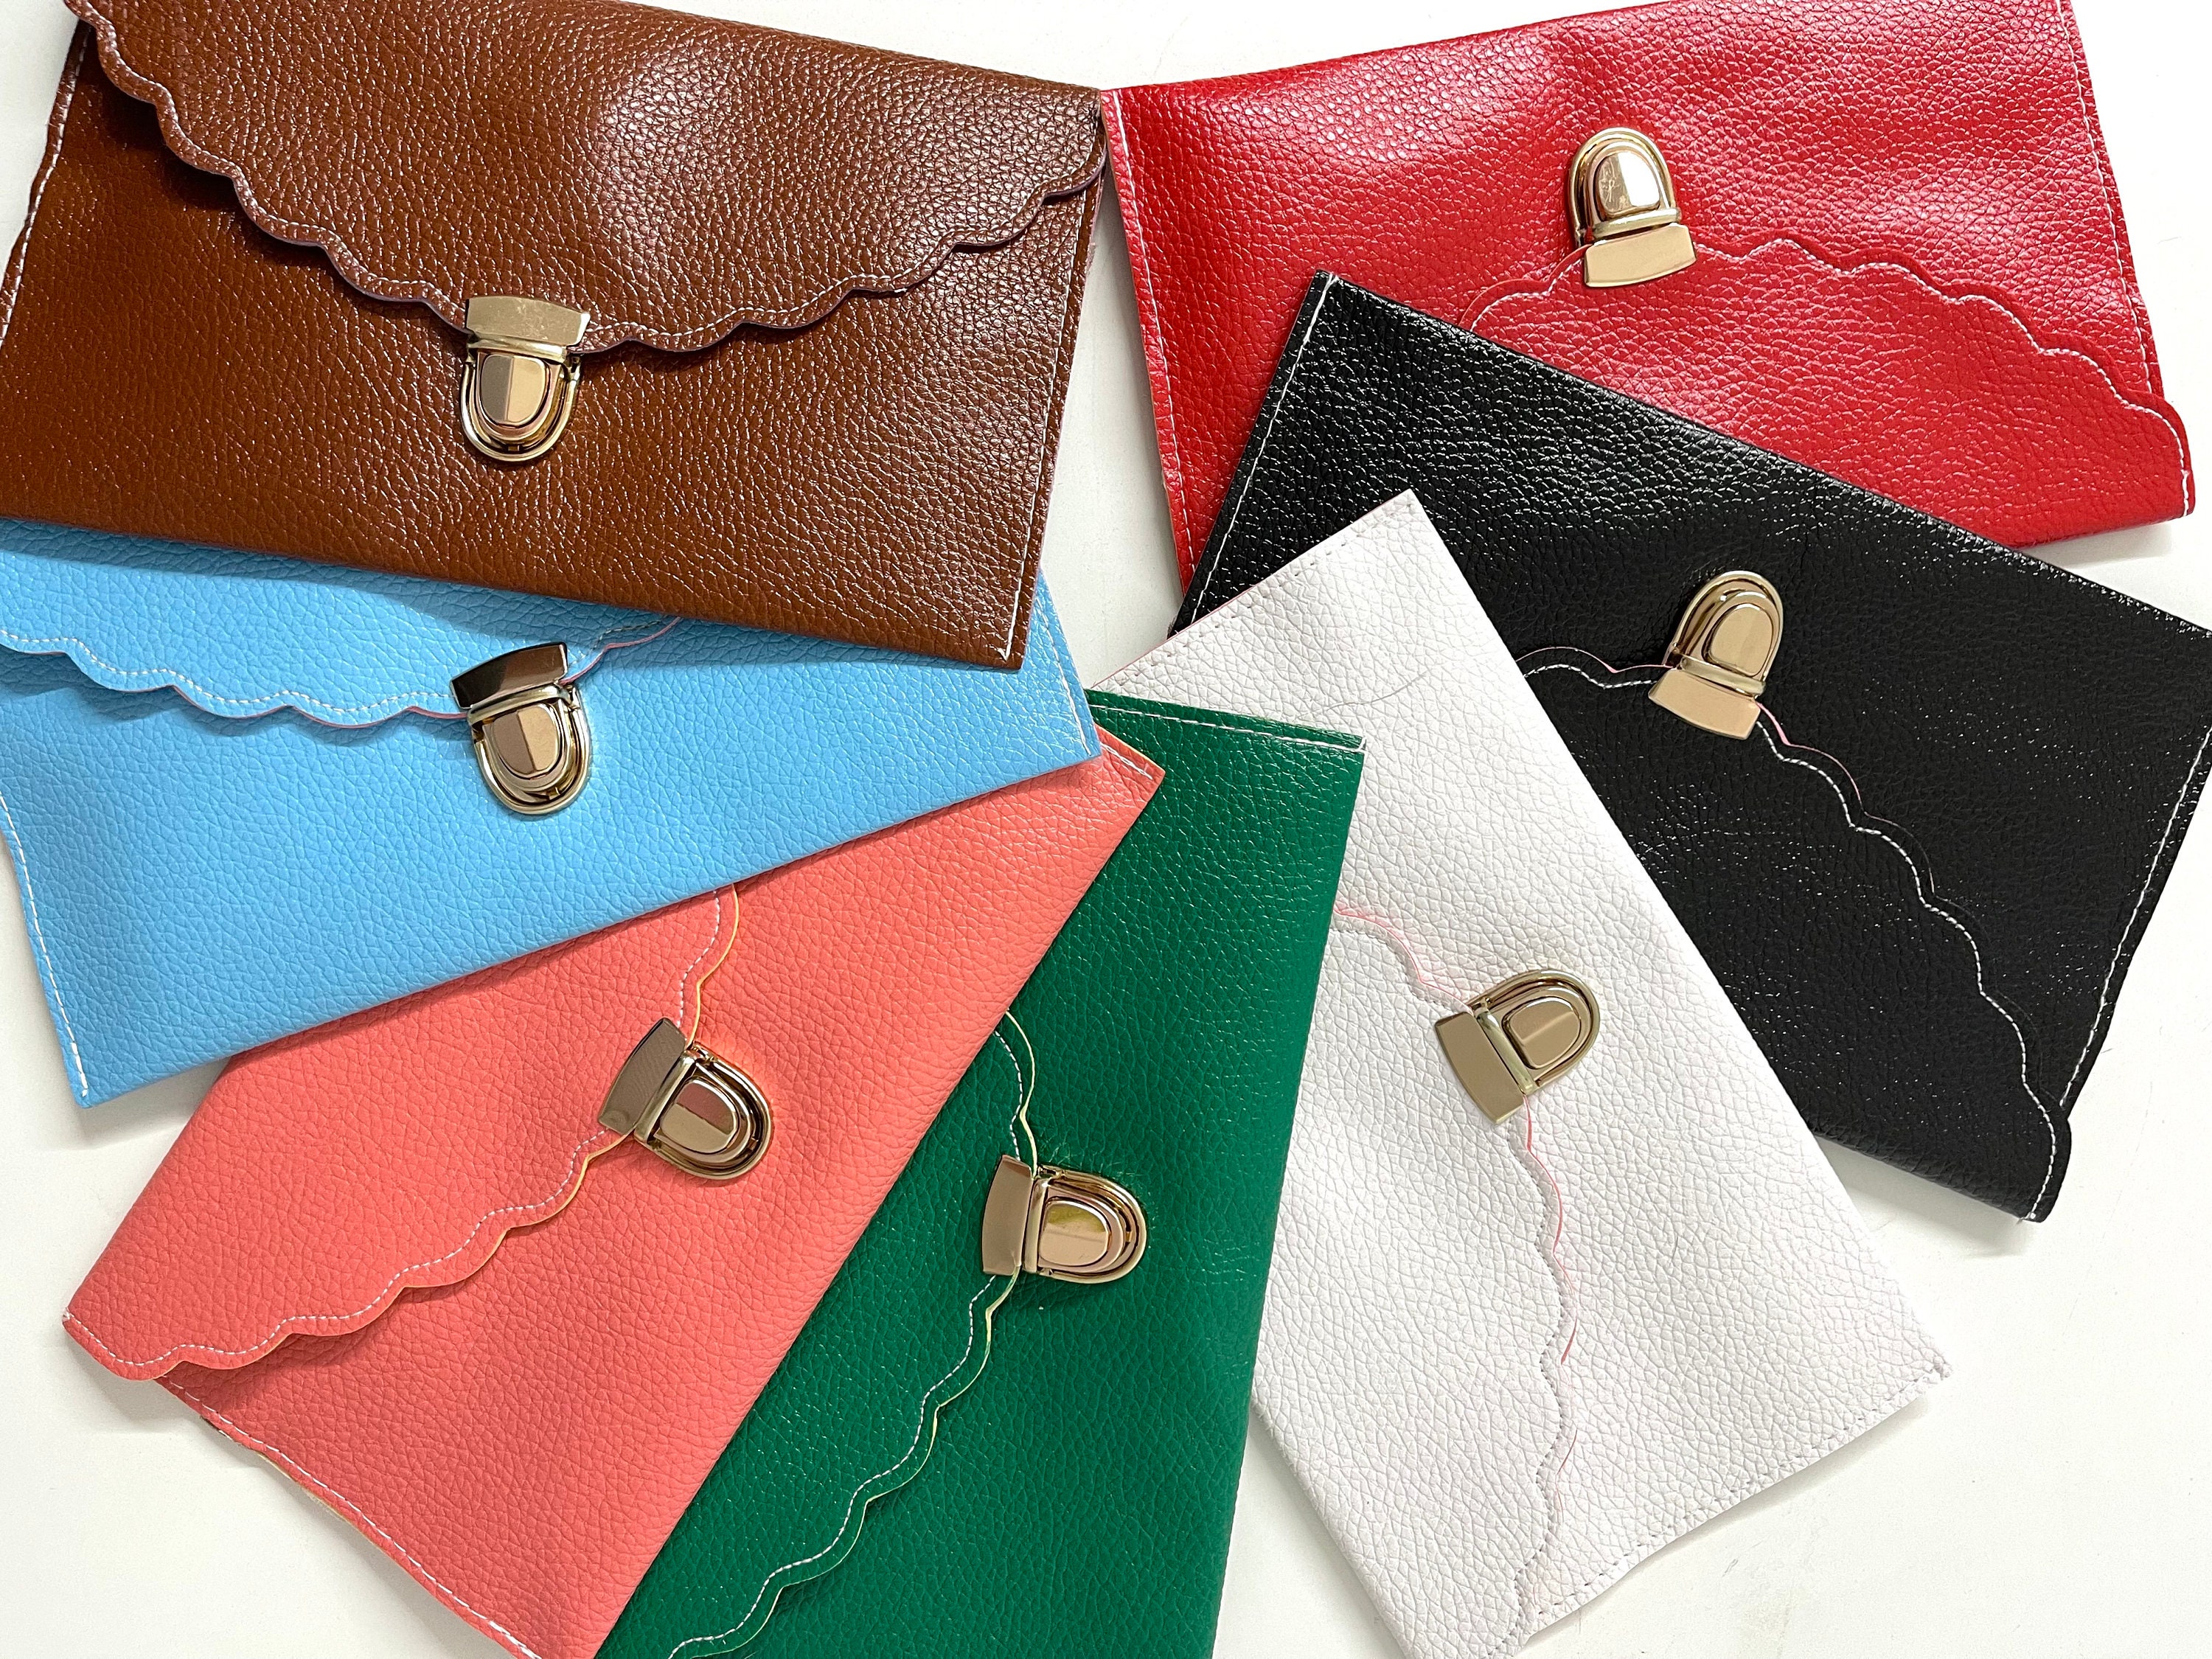 DIY Leather Envelope Clutch